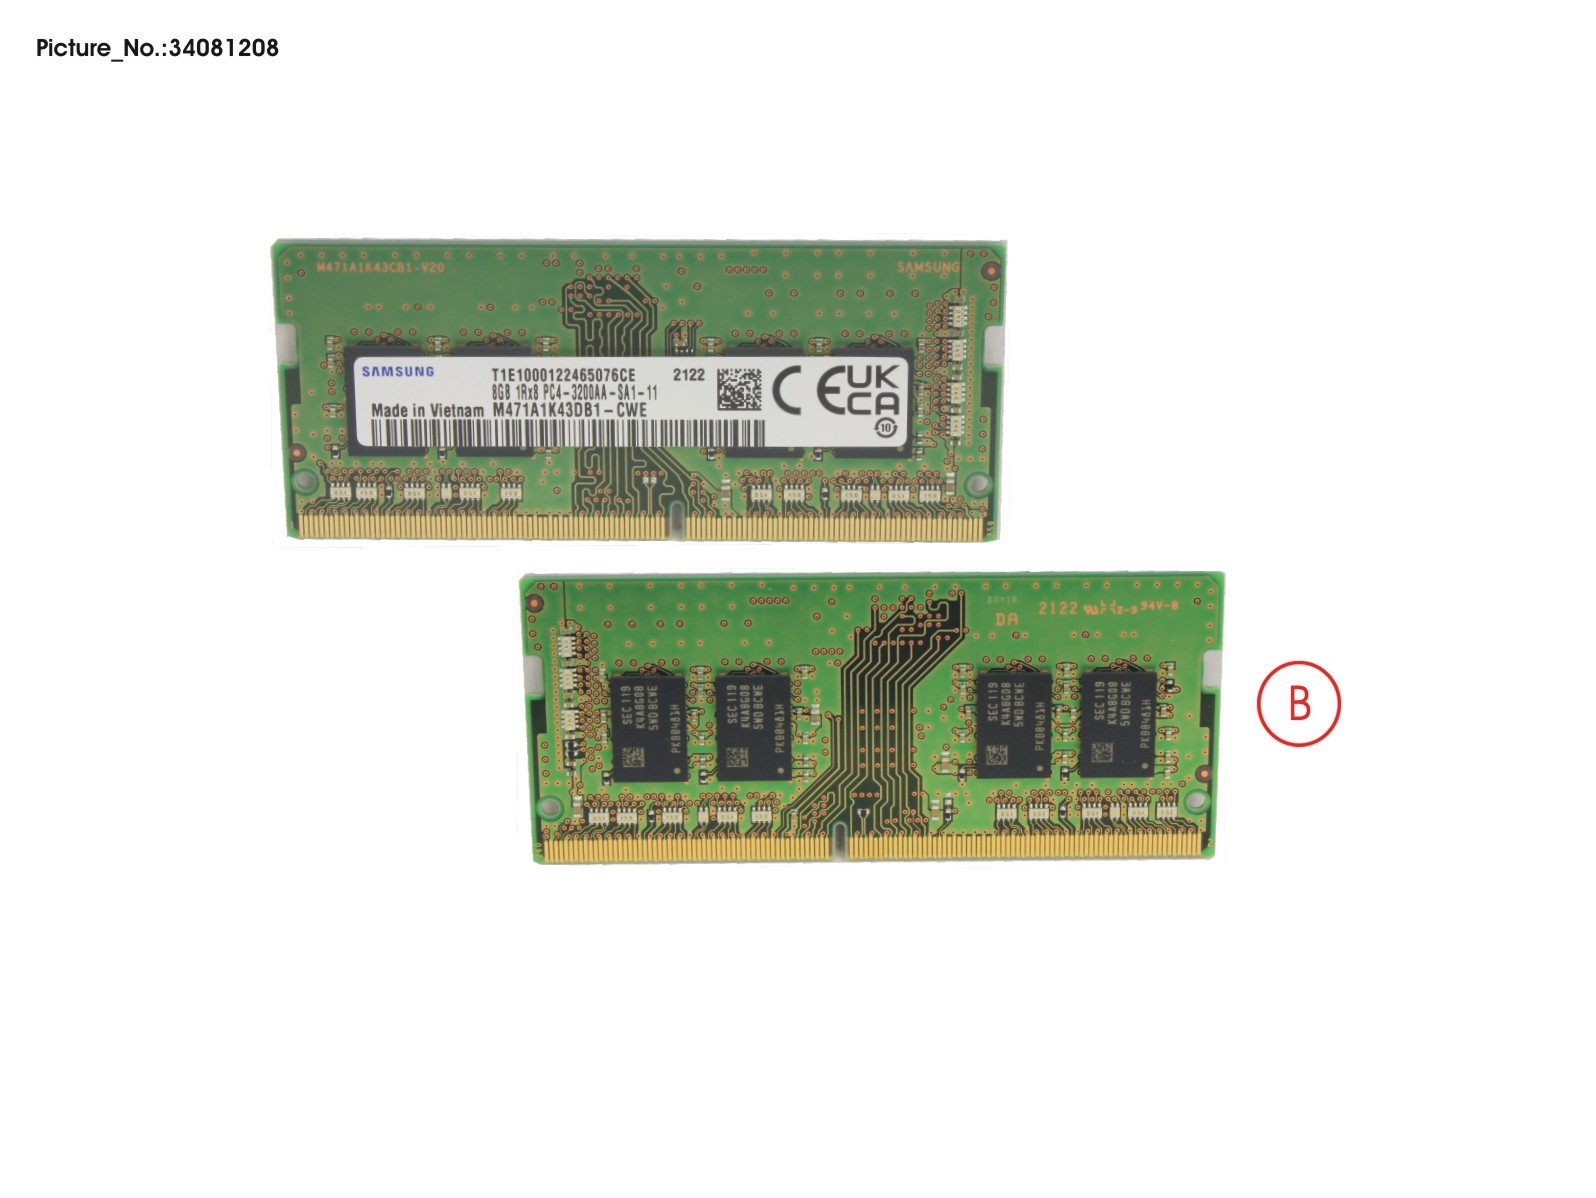 MEMORY 8GB DDR4-3200